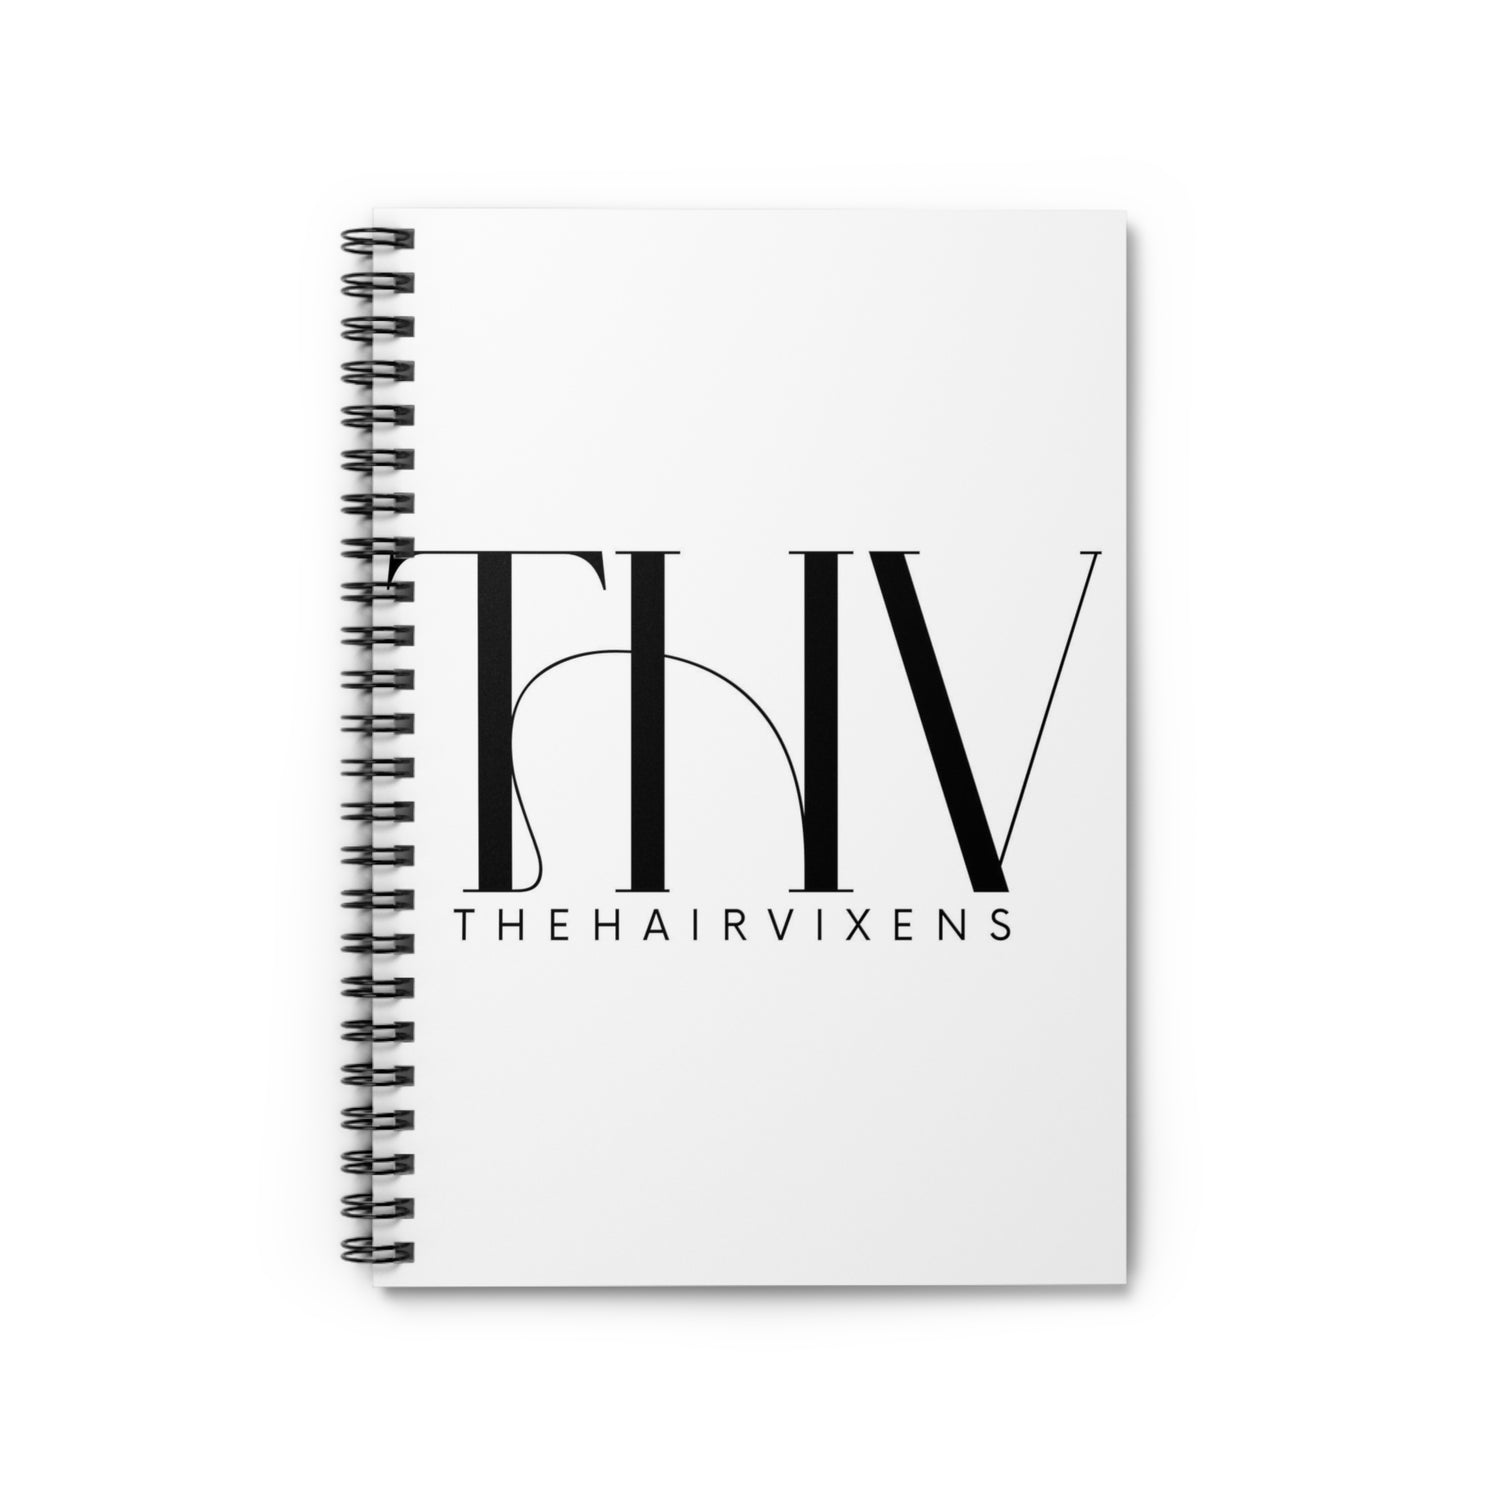 THV | Spiral Notebook - Ruled Line